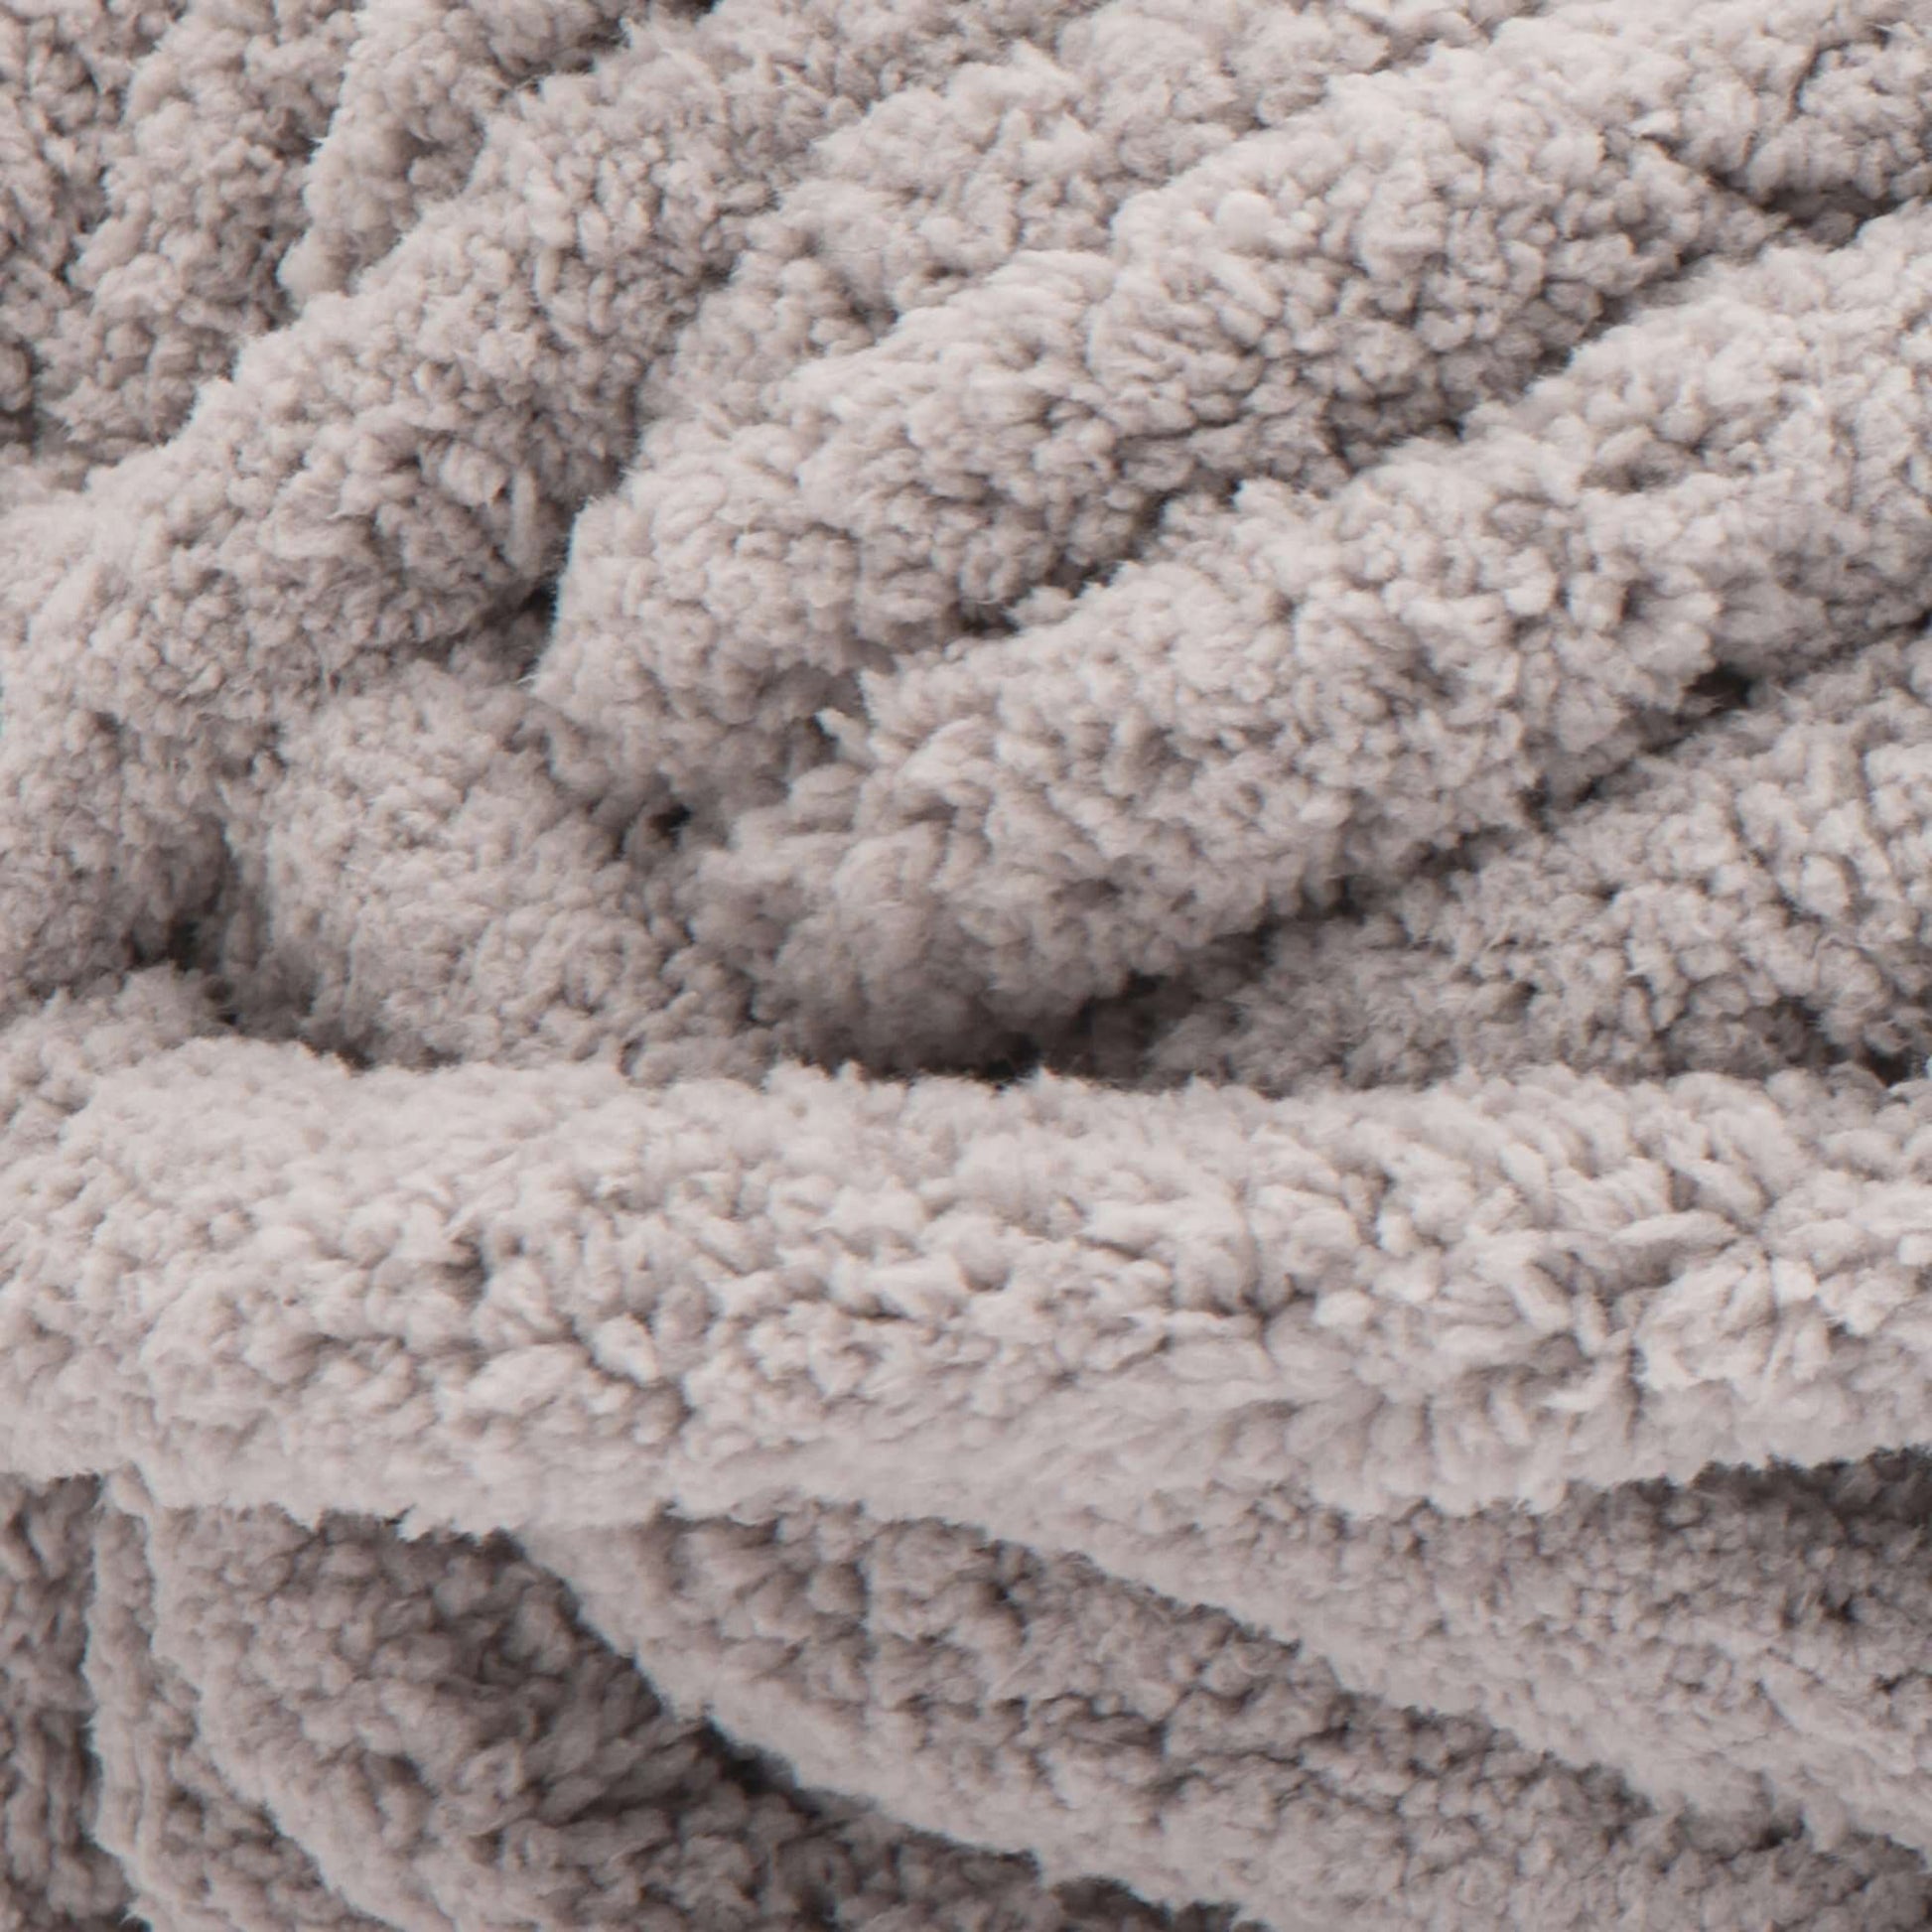 Bernat Blanket Big Yarn (300g/10.5oz) - Retailer Exclusive